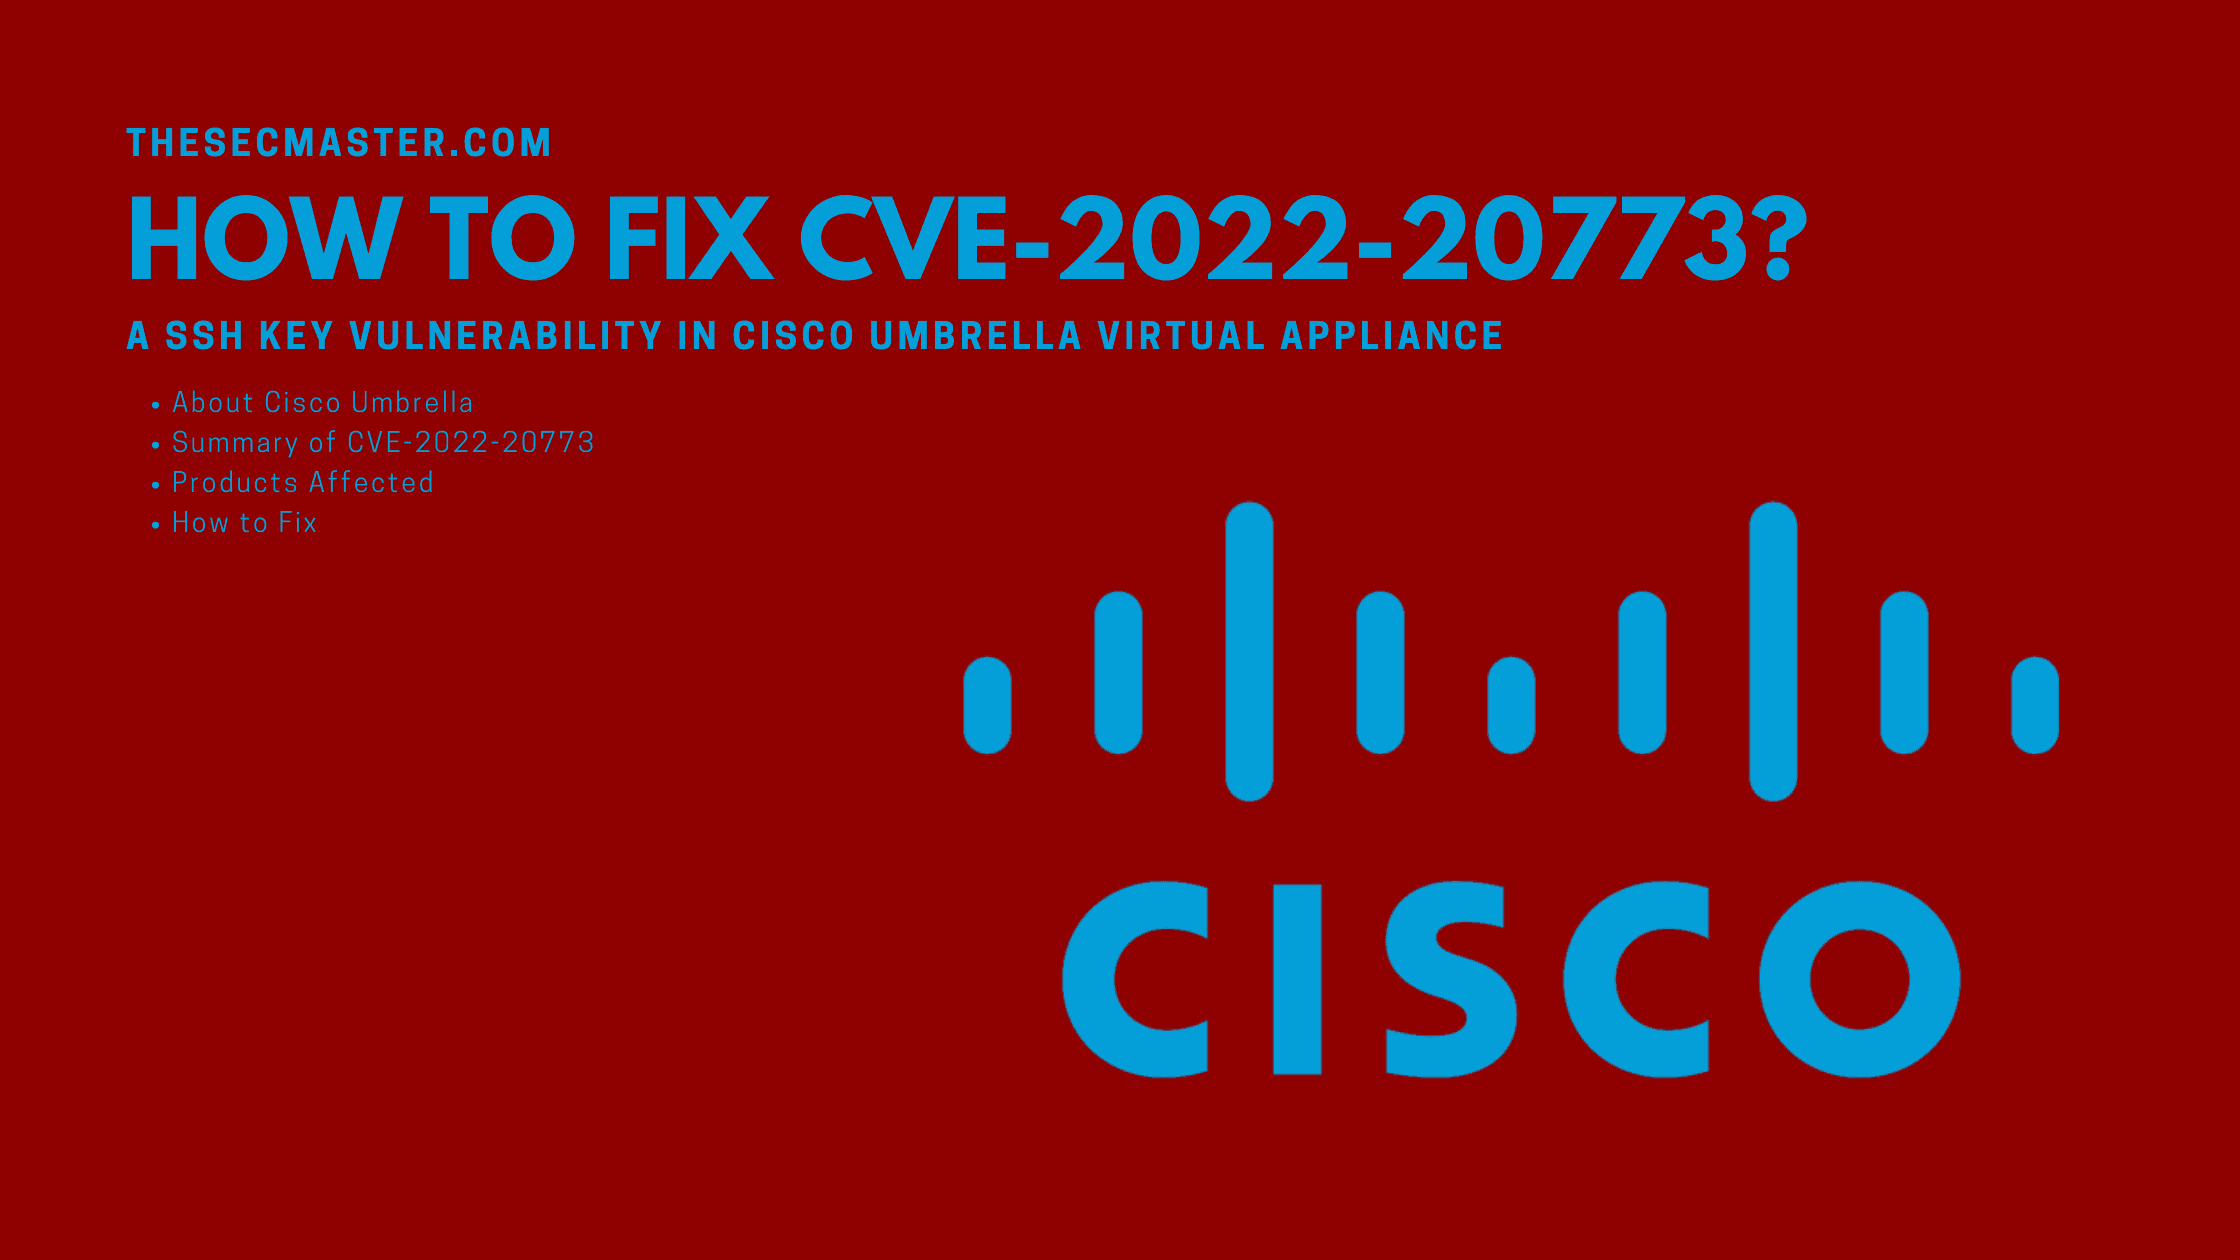 How To Fix The Ssh Key Vulnerability In Cisco Umbrella Virtual Appliance Cve 2022 20773